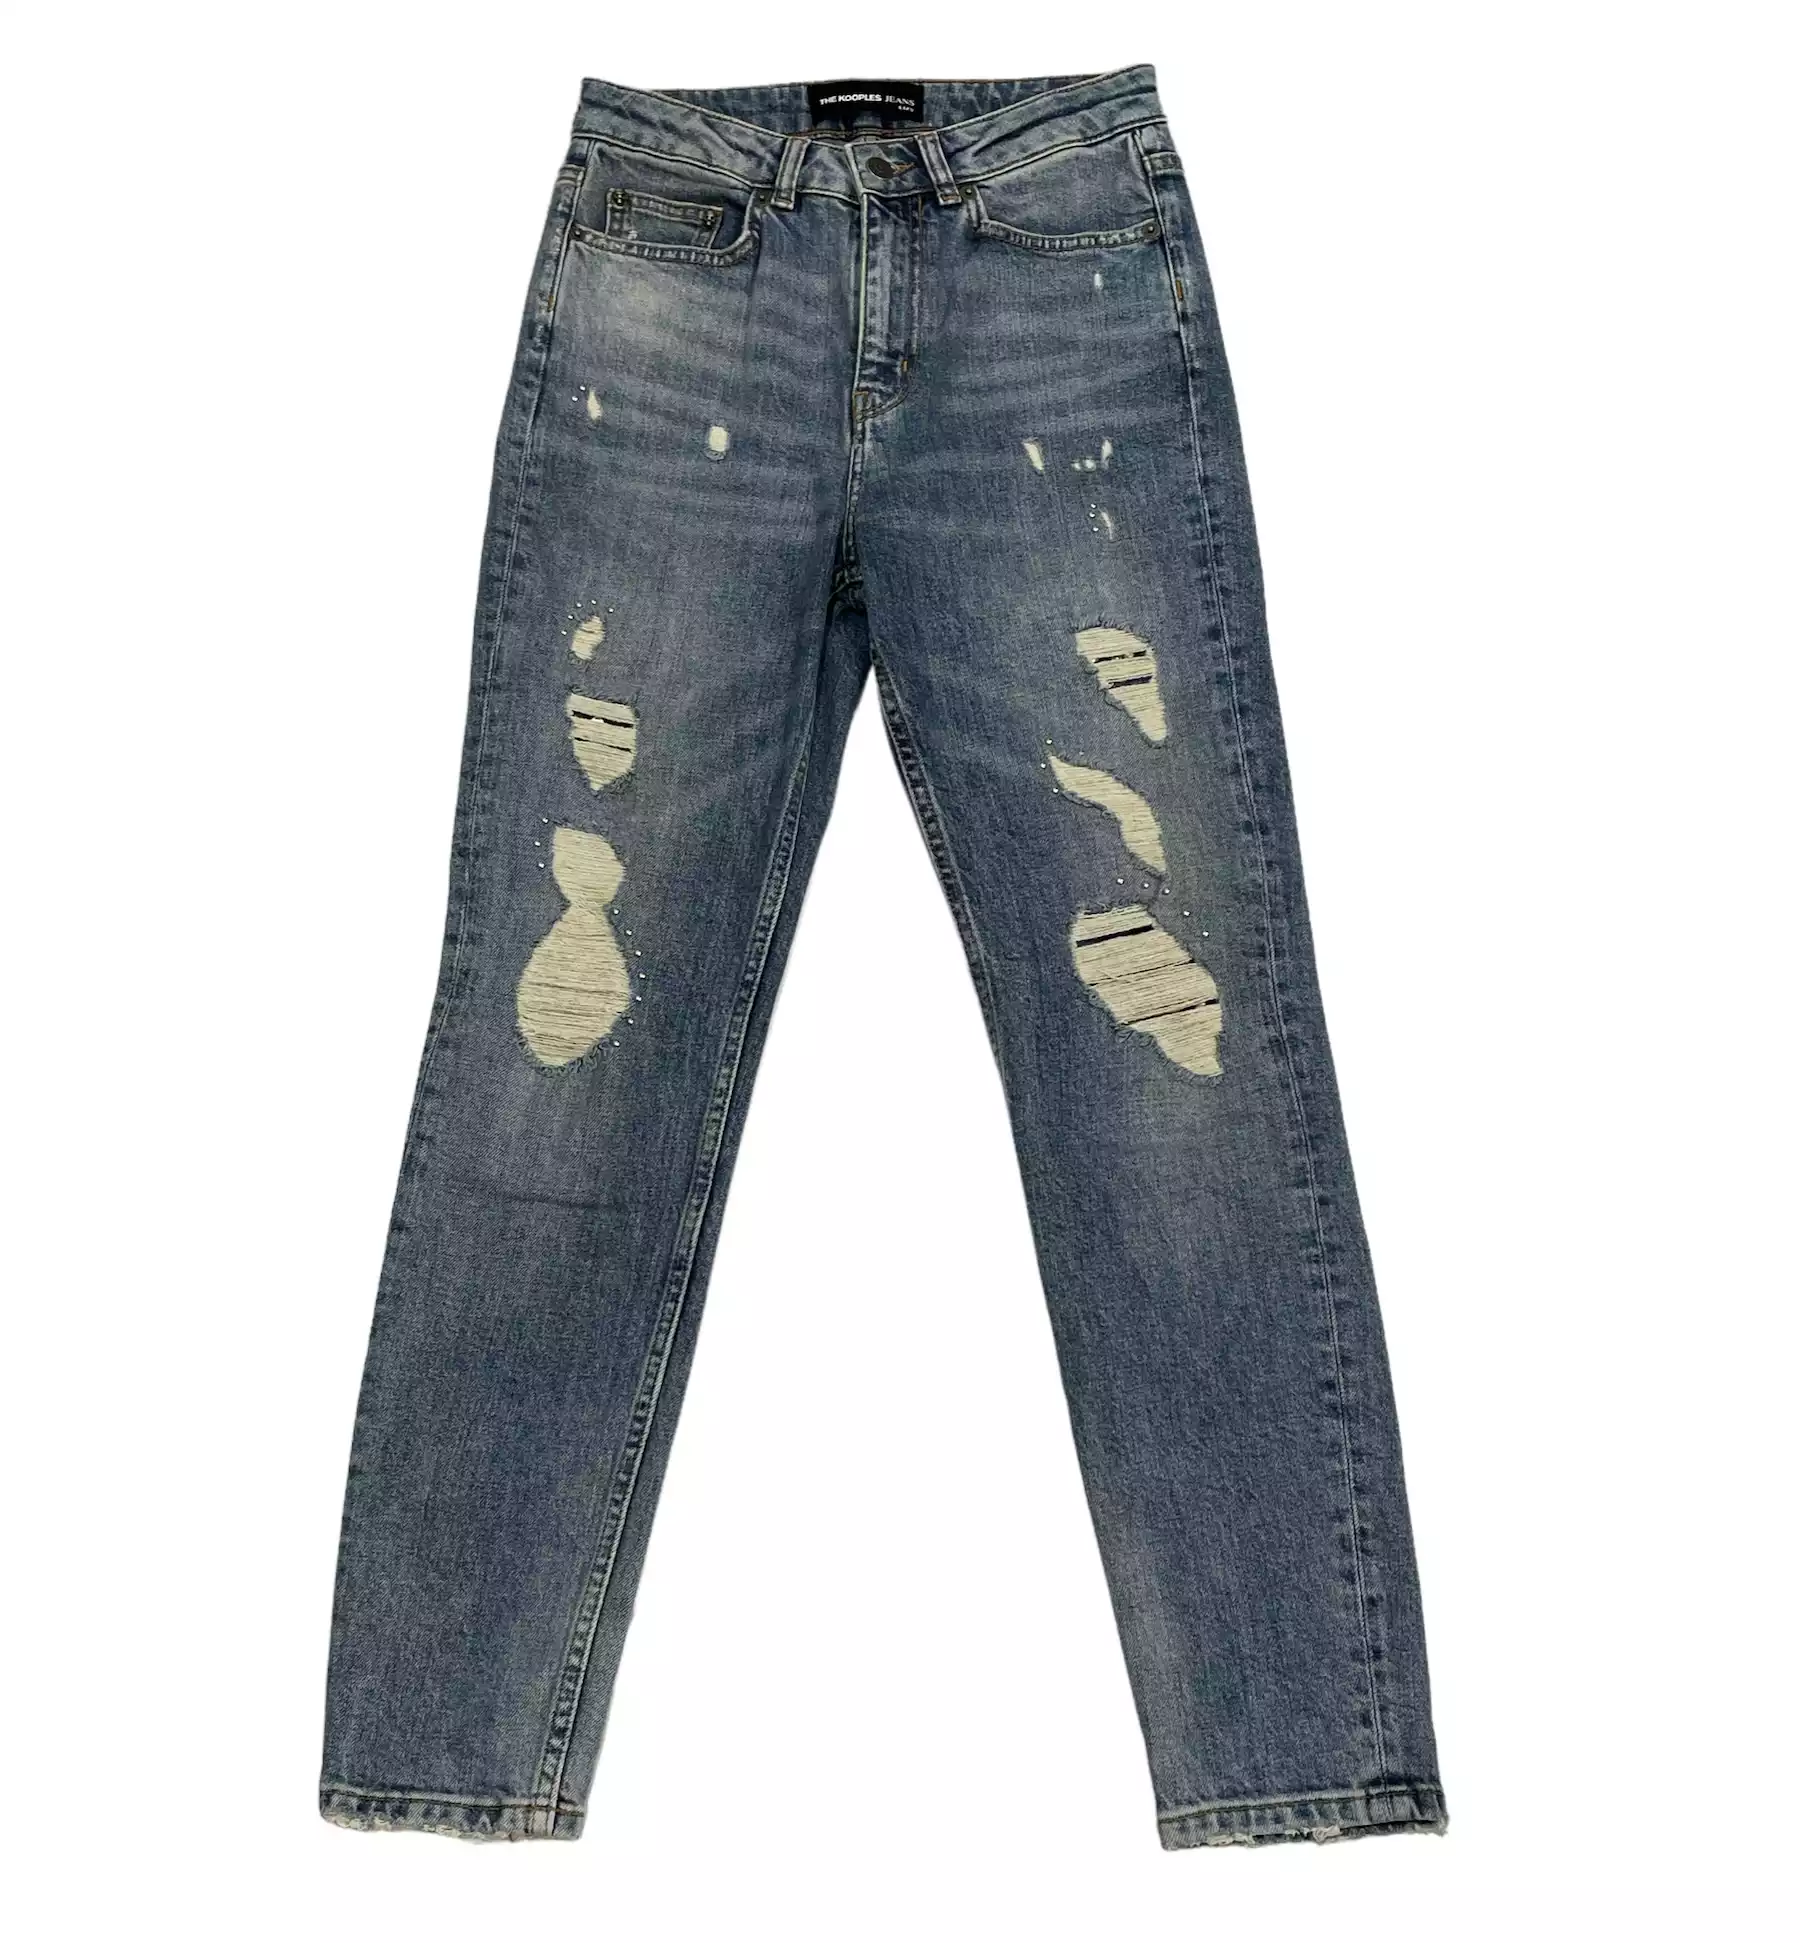 Denim Jeans by The Kooples